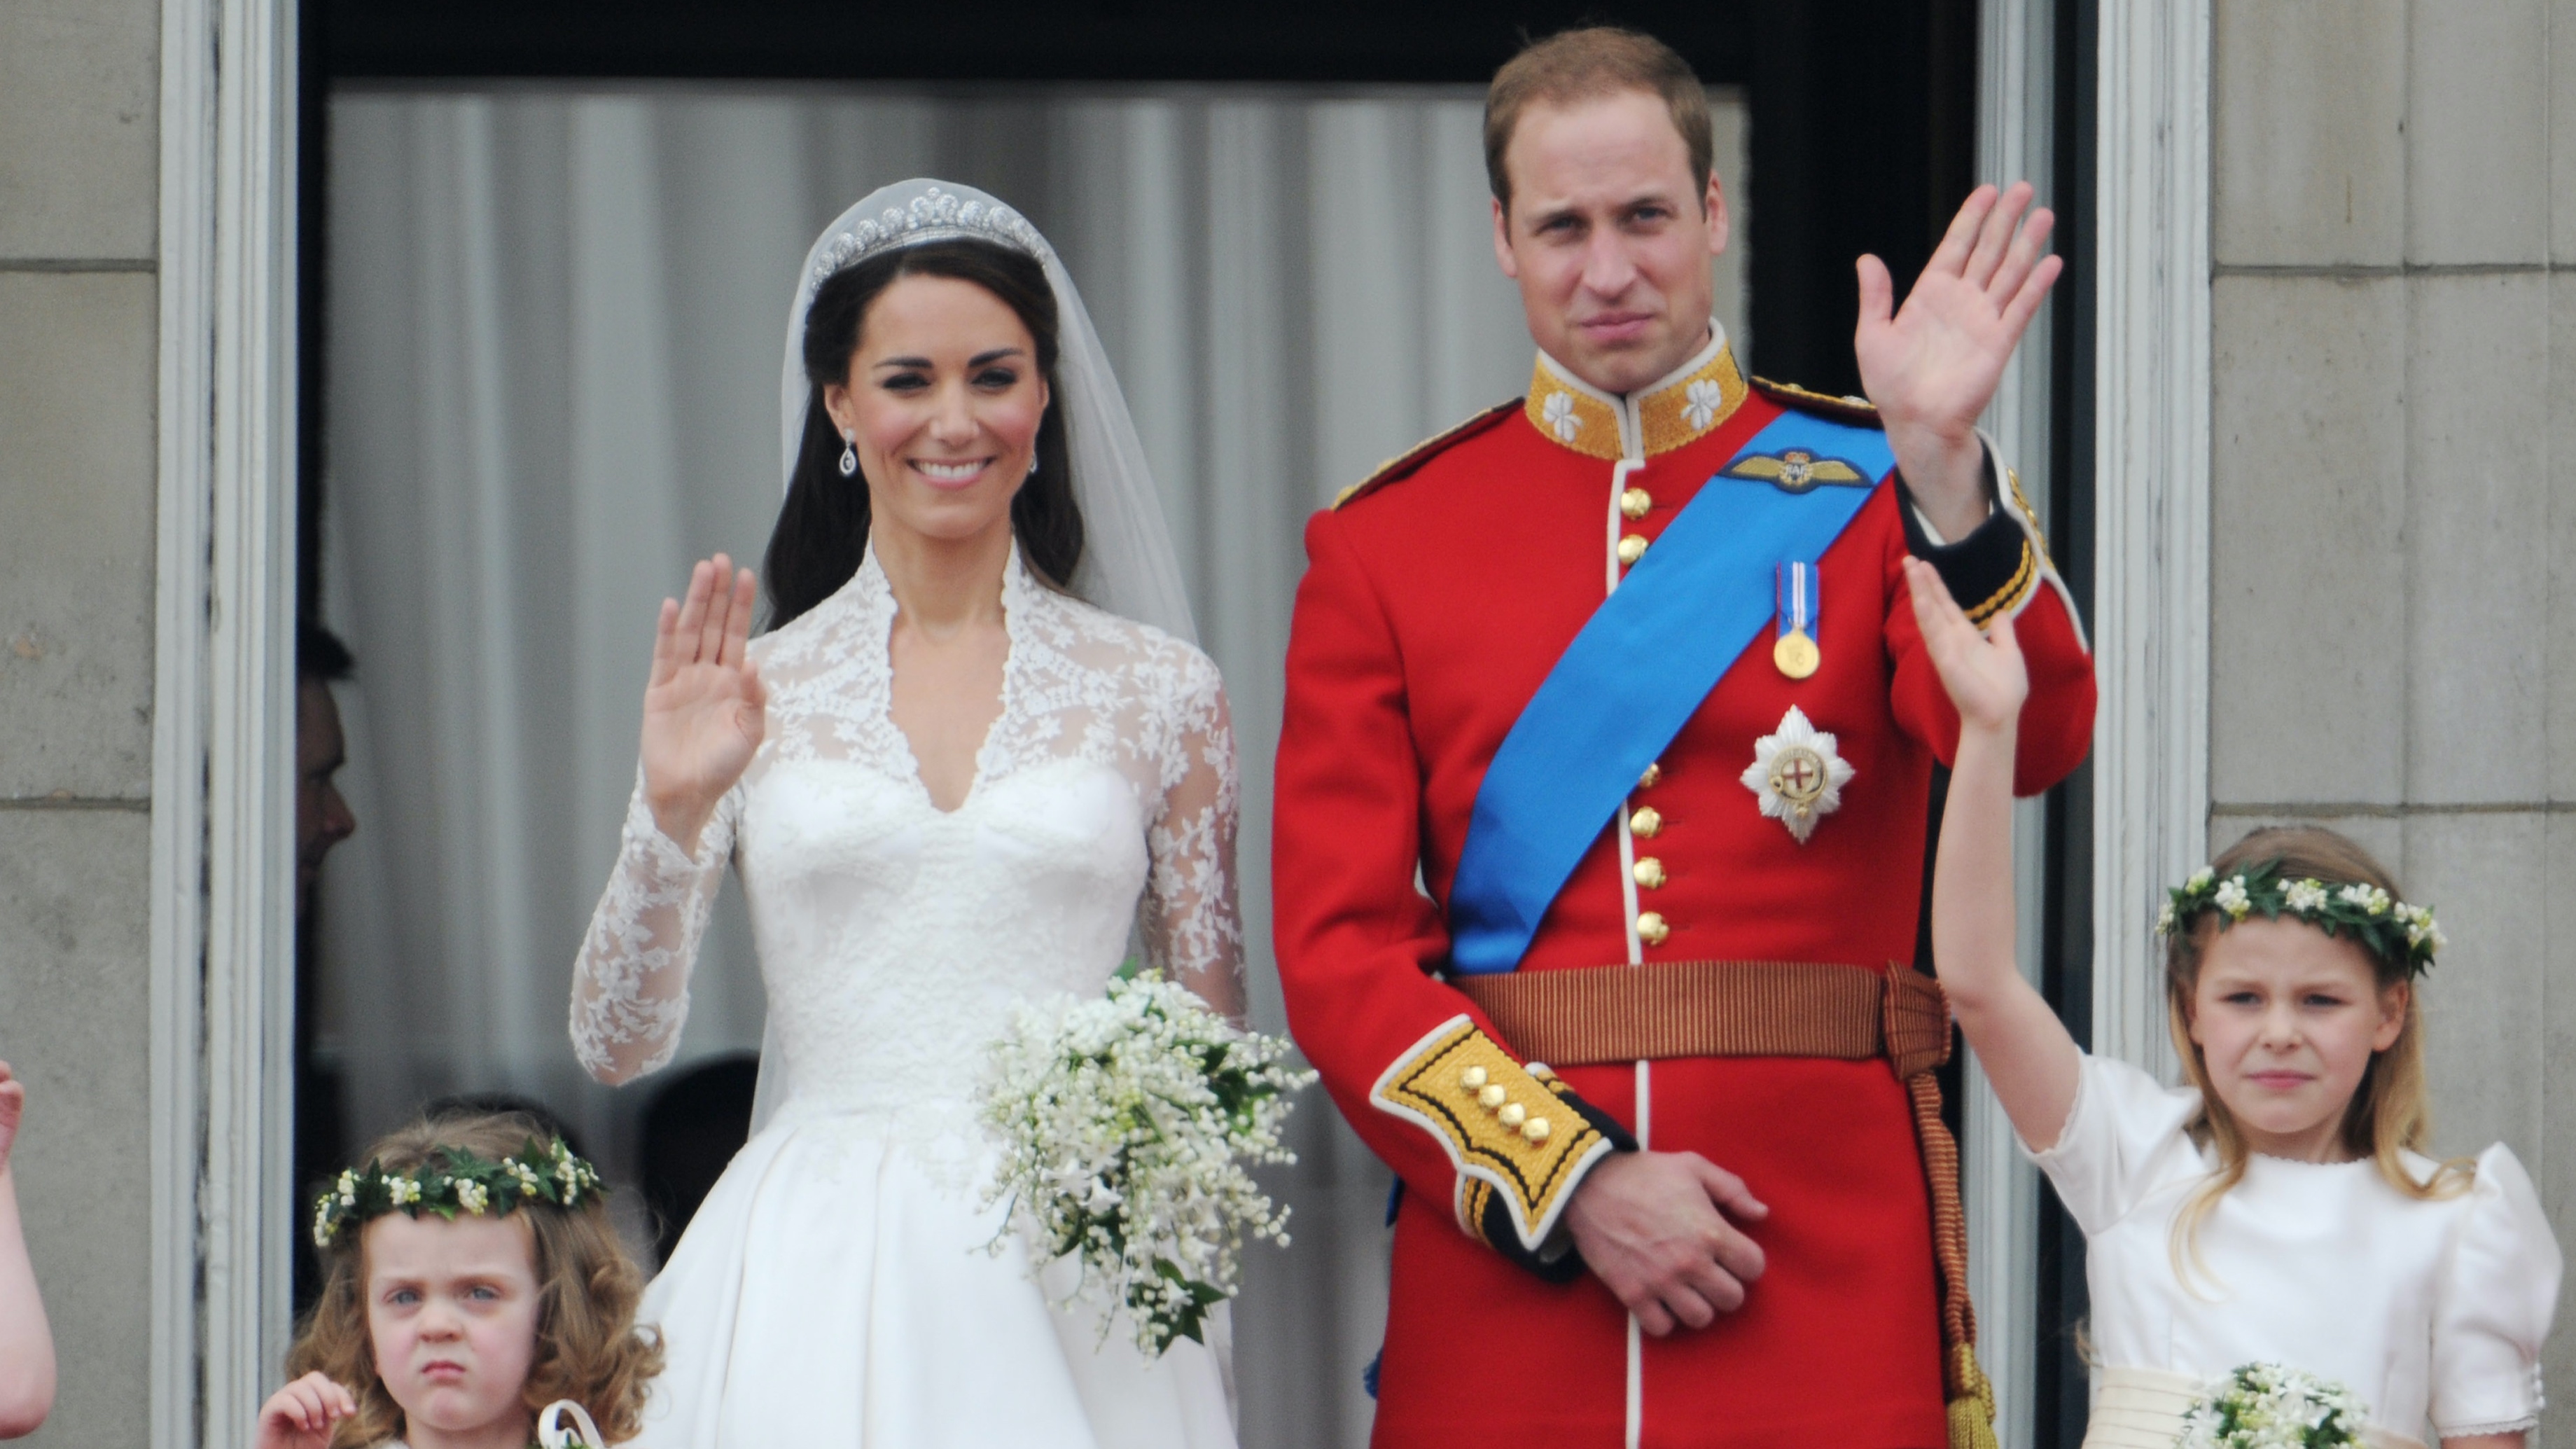 UK - Wedding of Prince William & Kate Middleton - Buckingham Palace (Photo by Stephane Cardinale/Corbis via Getty Images)